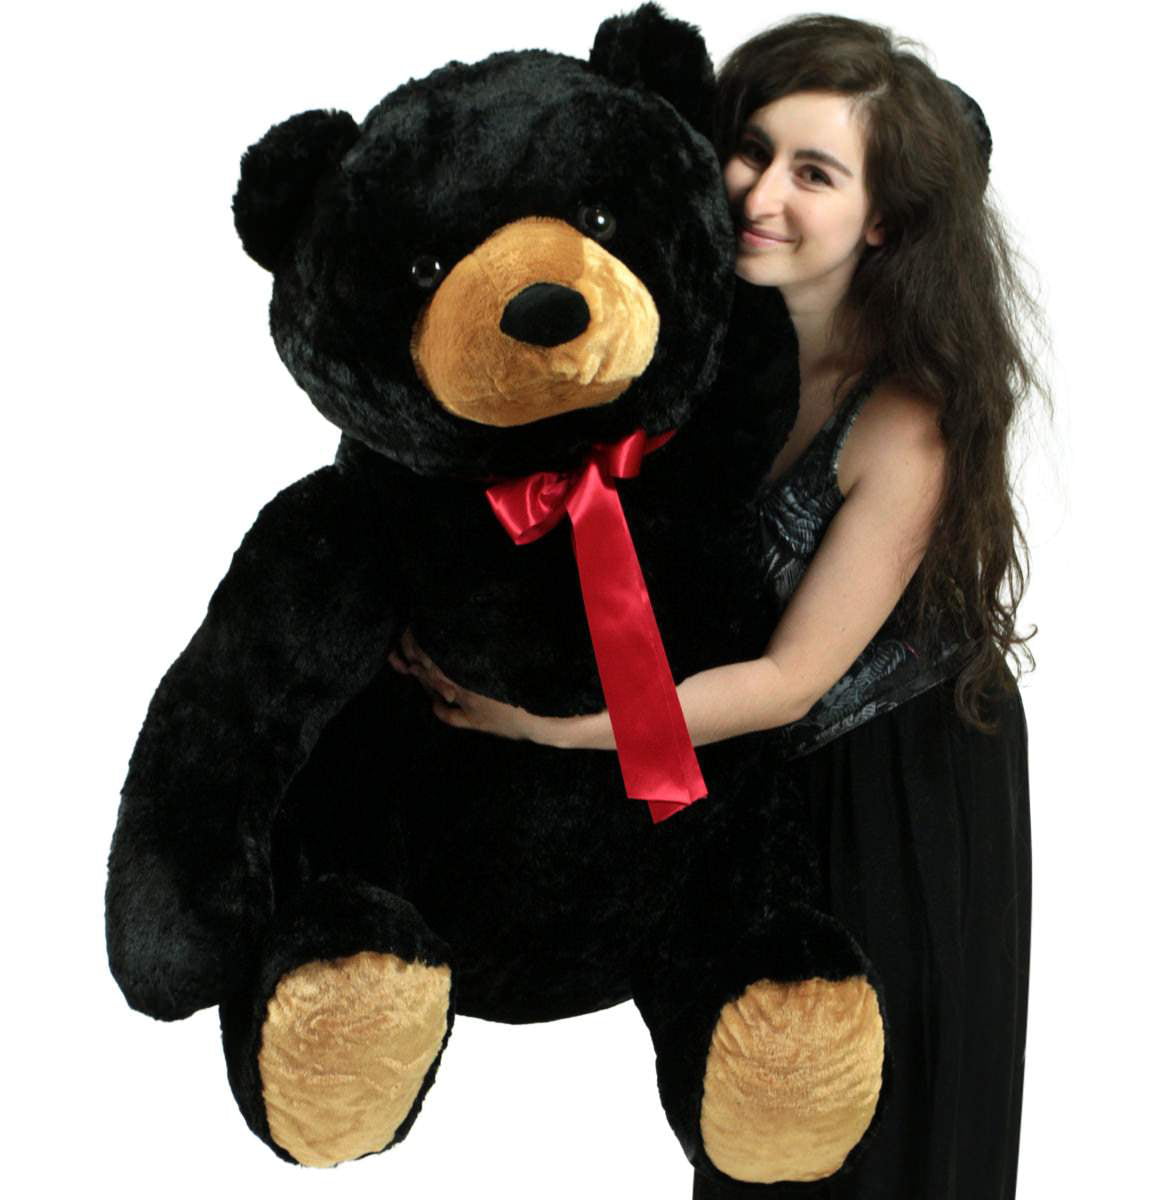 black teddy bear cost